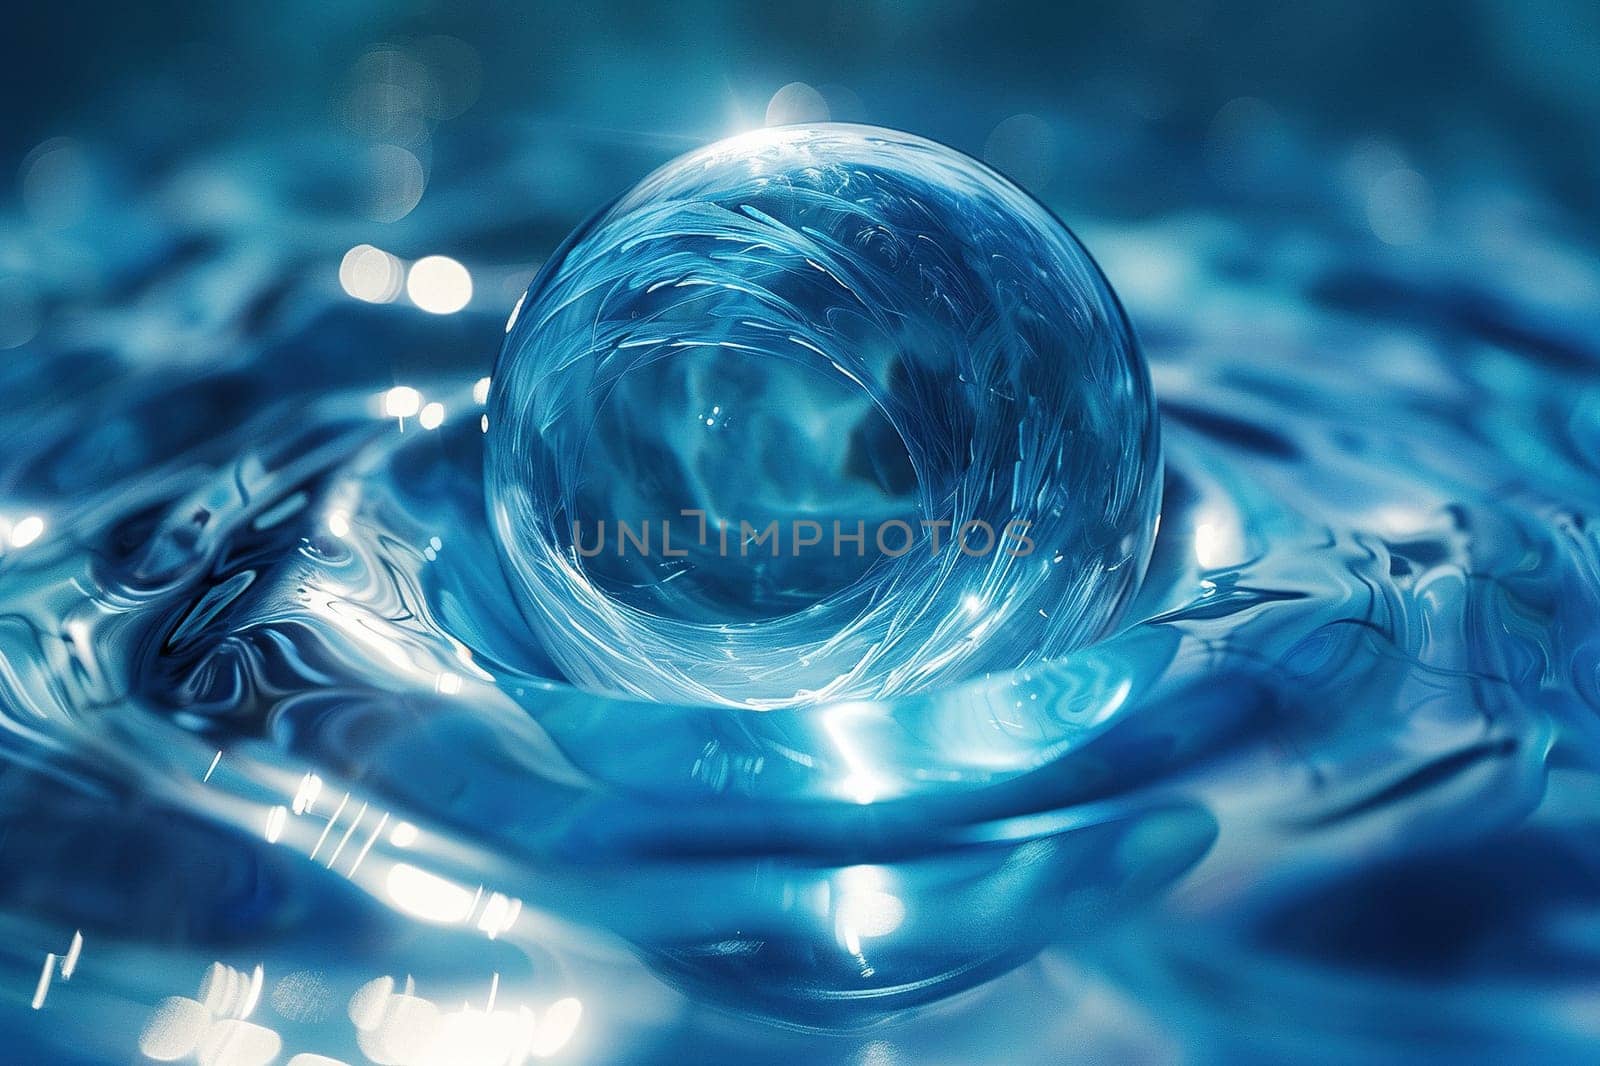 Glass blue sphere on a liquid blue surface.